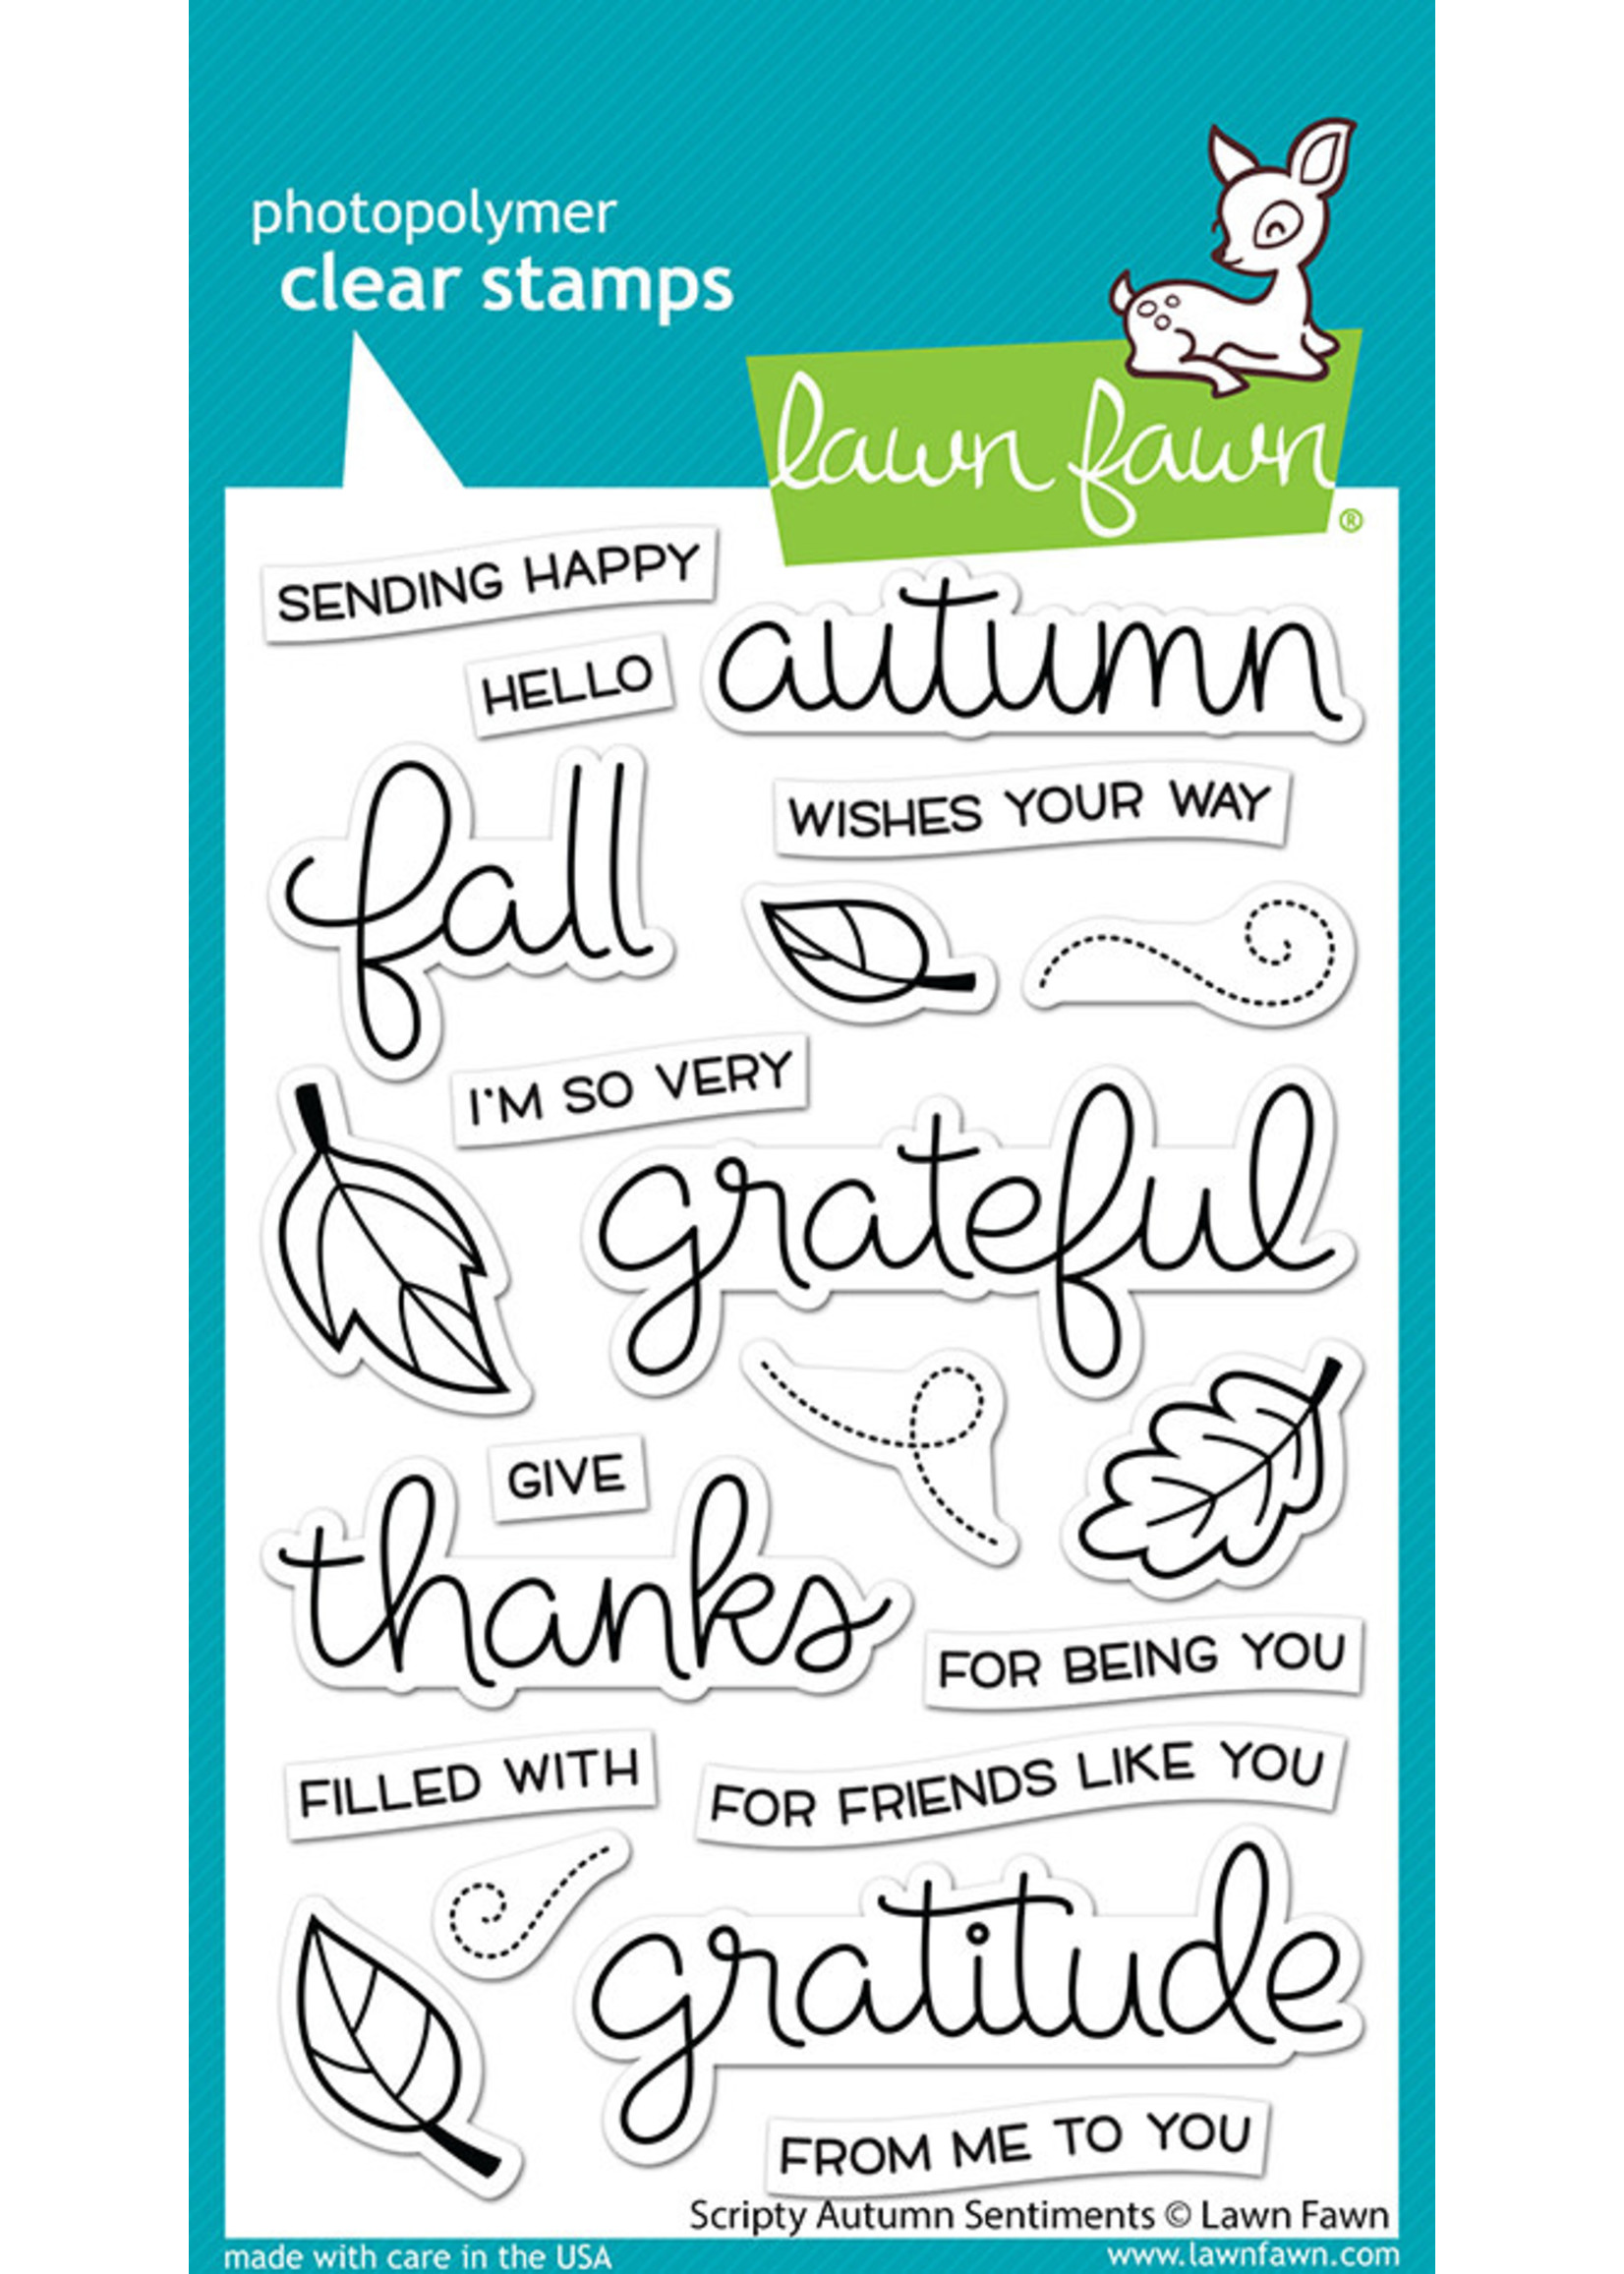 Lawn Fawn scripty autumn sentiments stamp